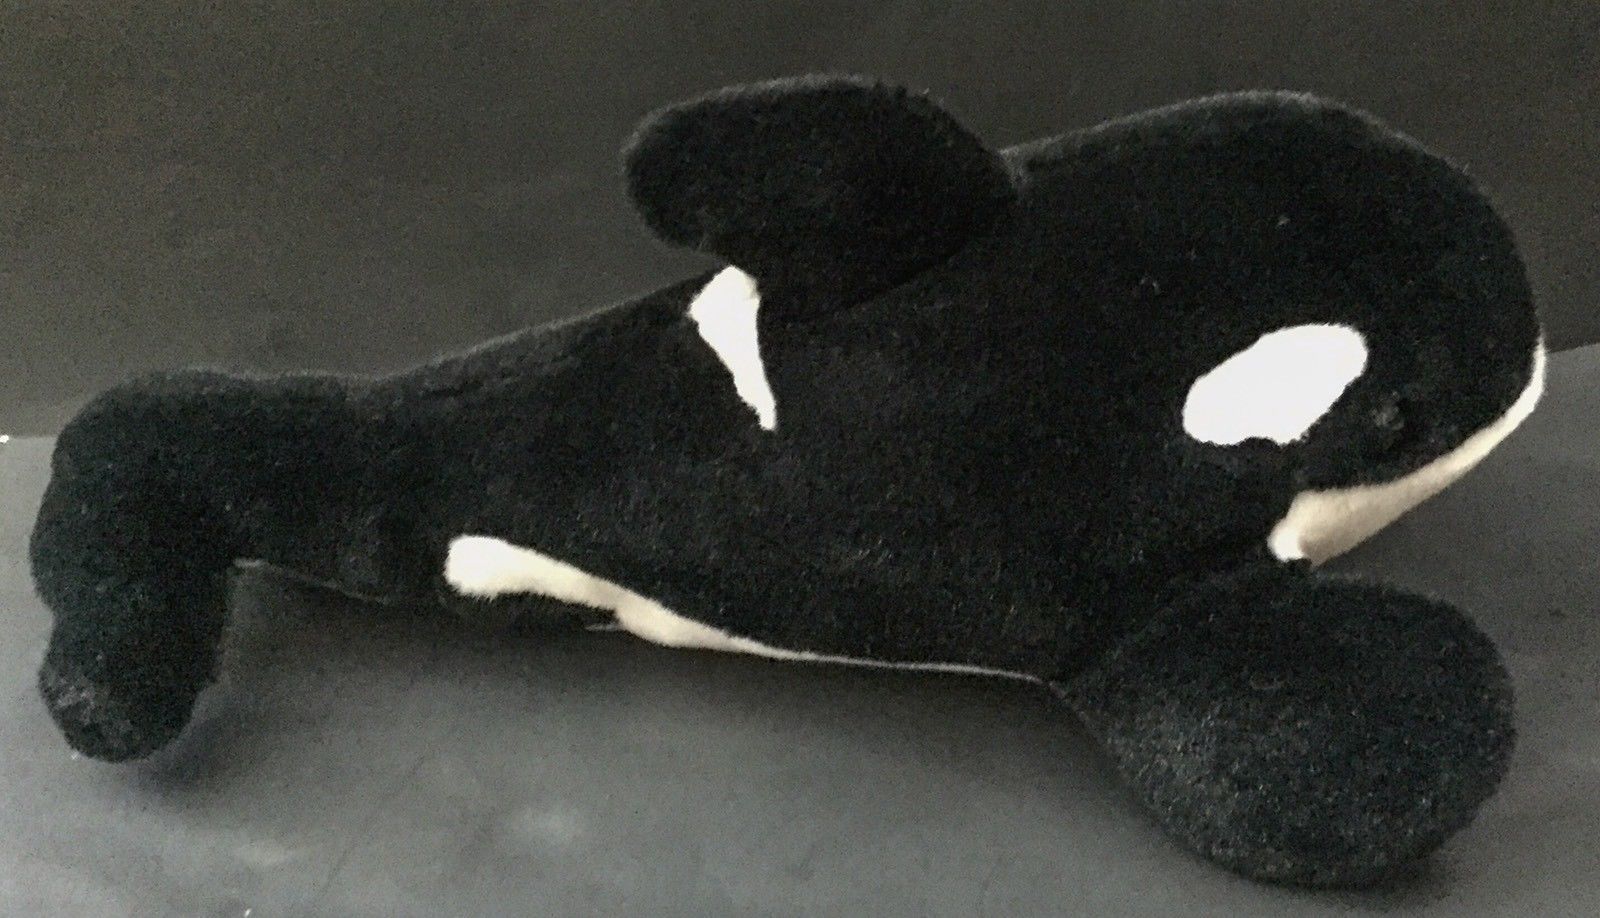 seaworld orca stuffed animal